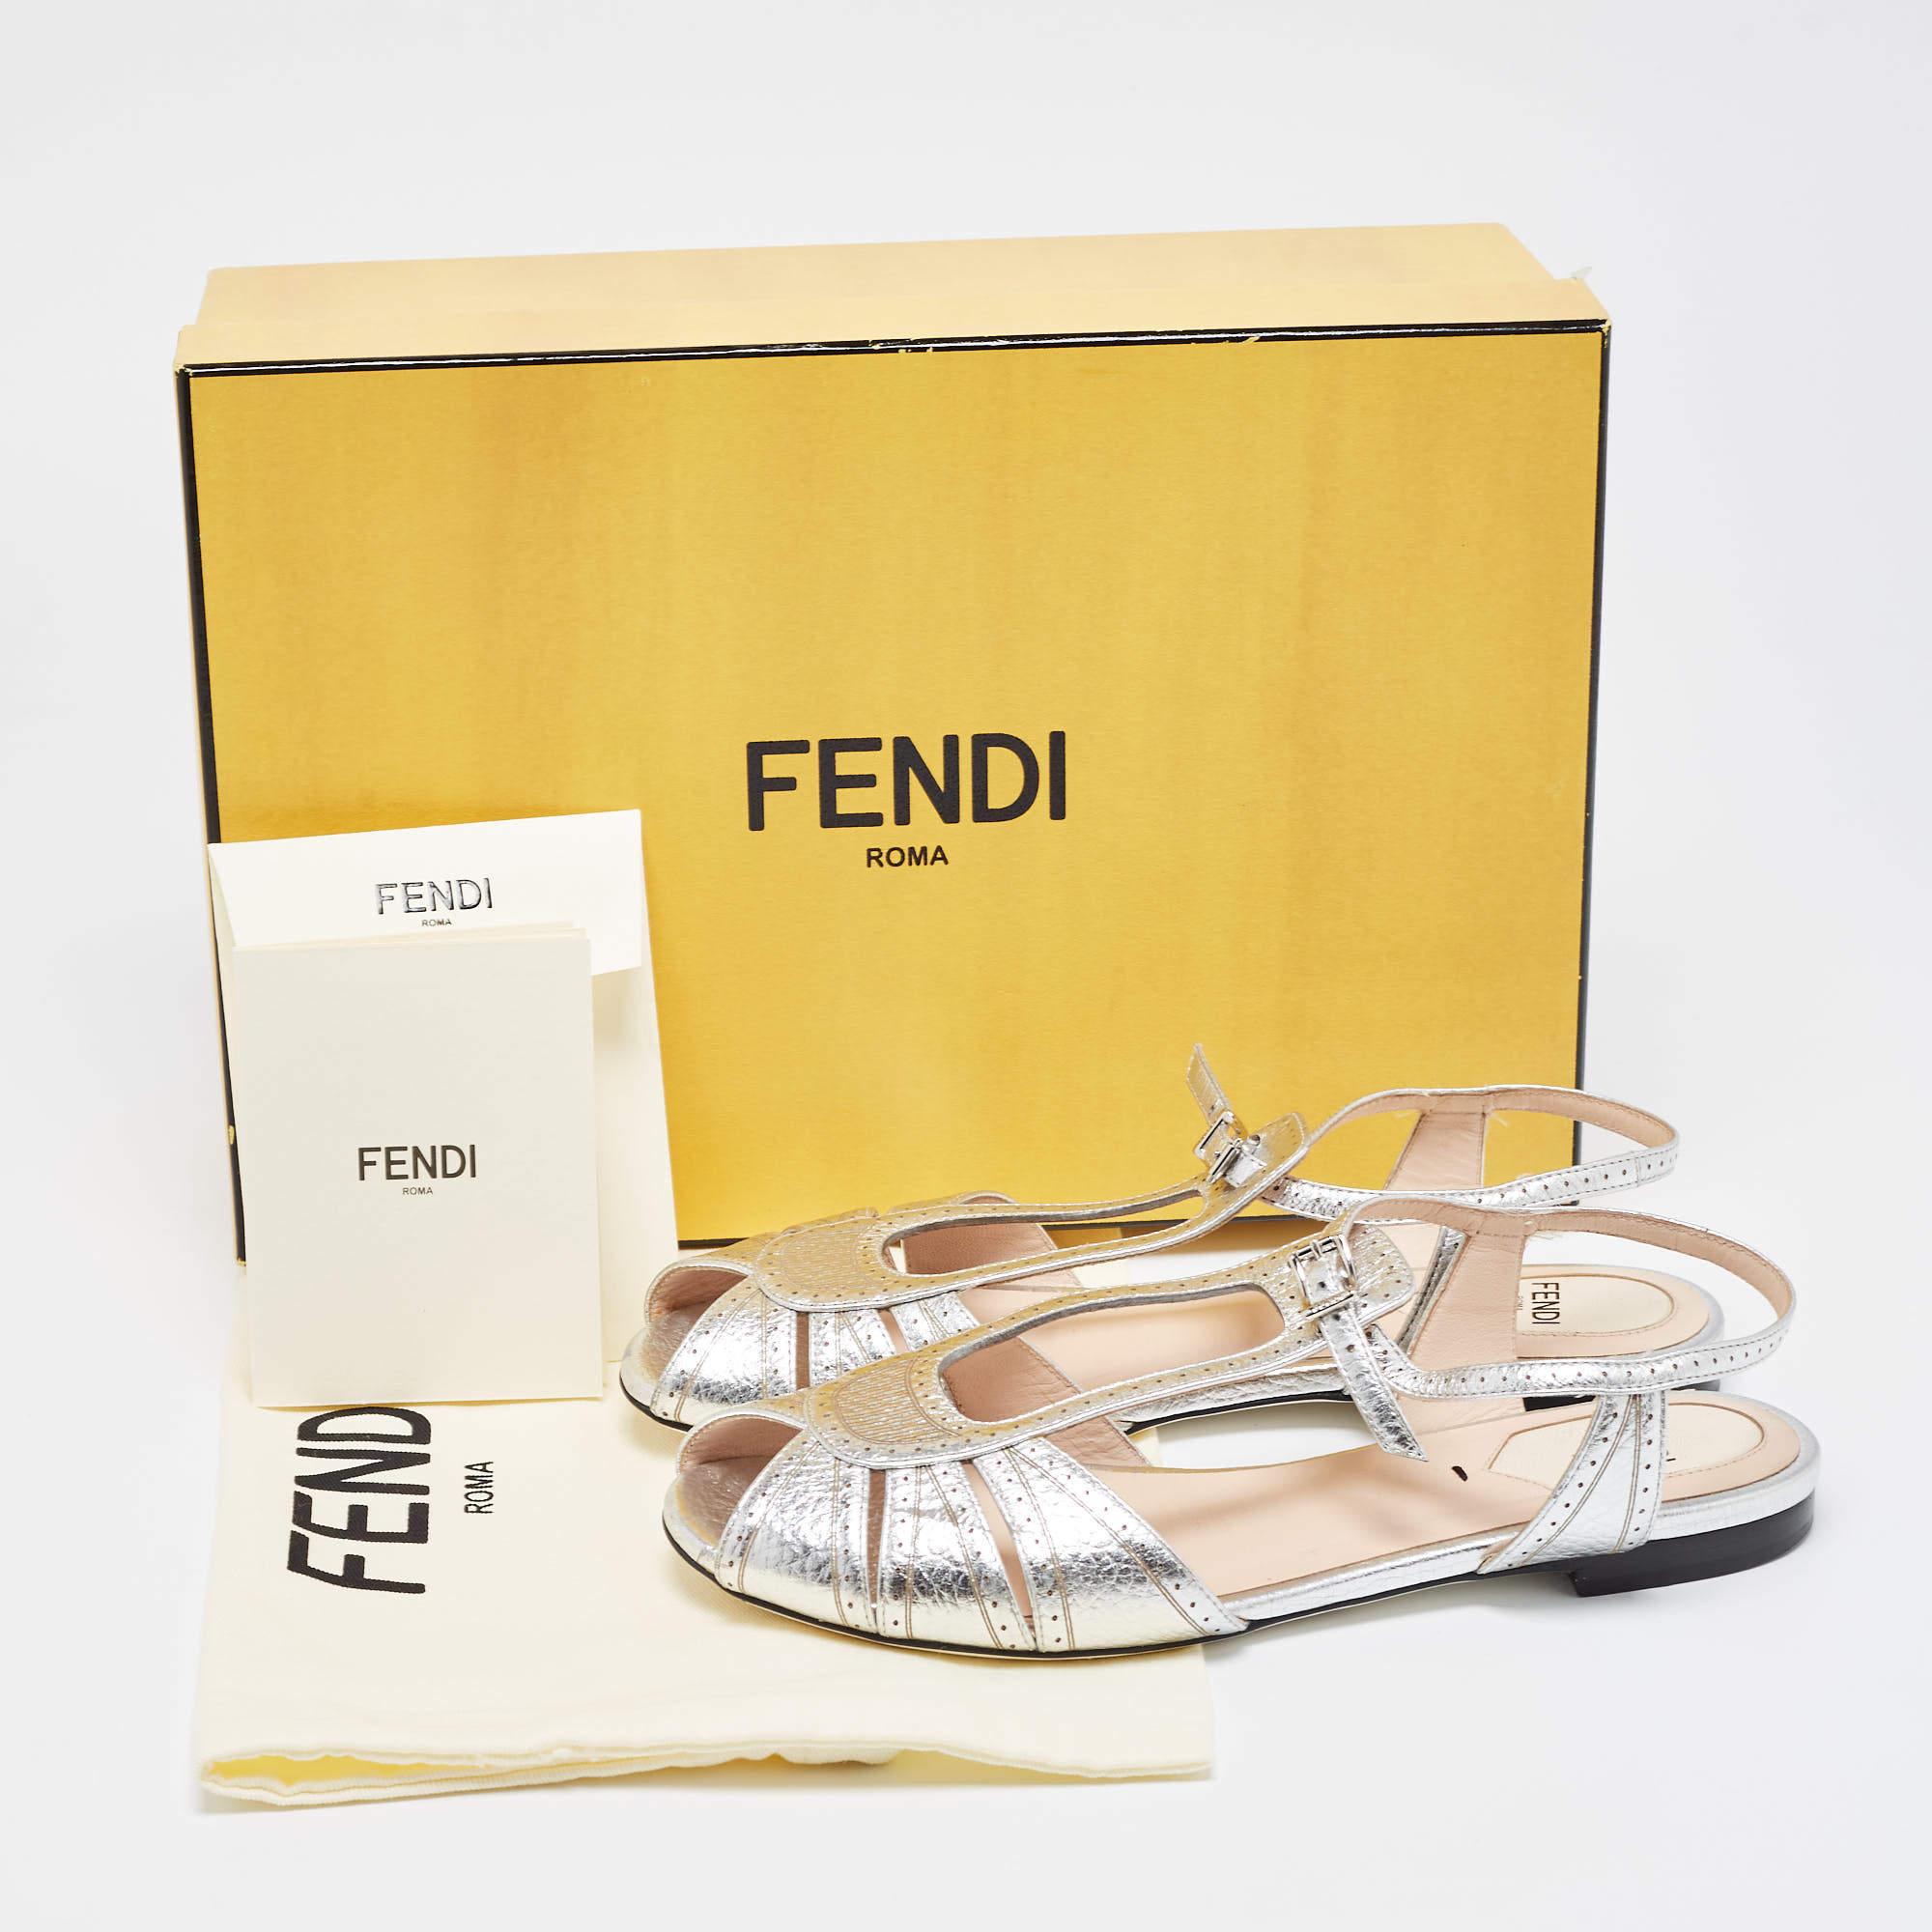 Fendi Metallic Silver Foil Leather Chameleon Ankle Strap Flat Sandals Size 36 For Sale 2